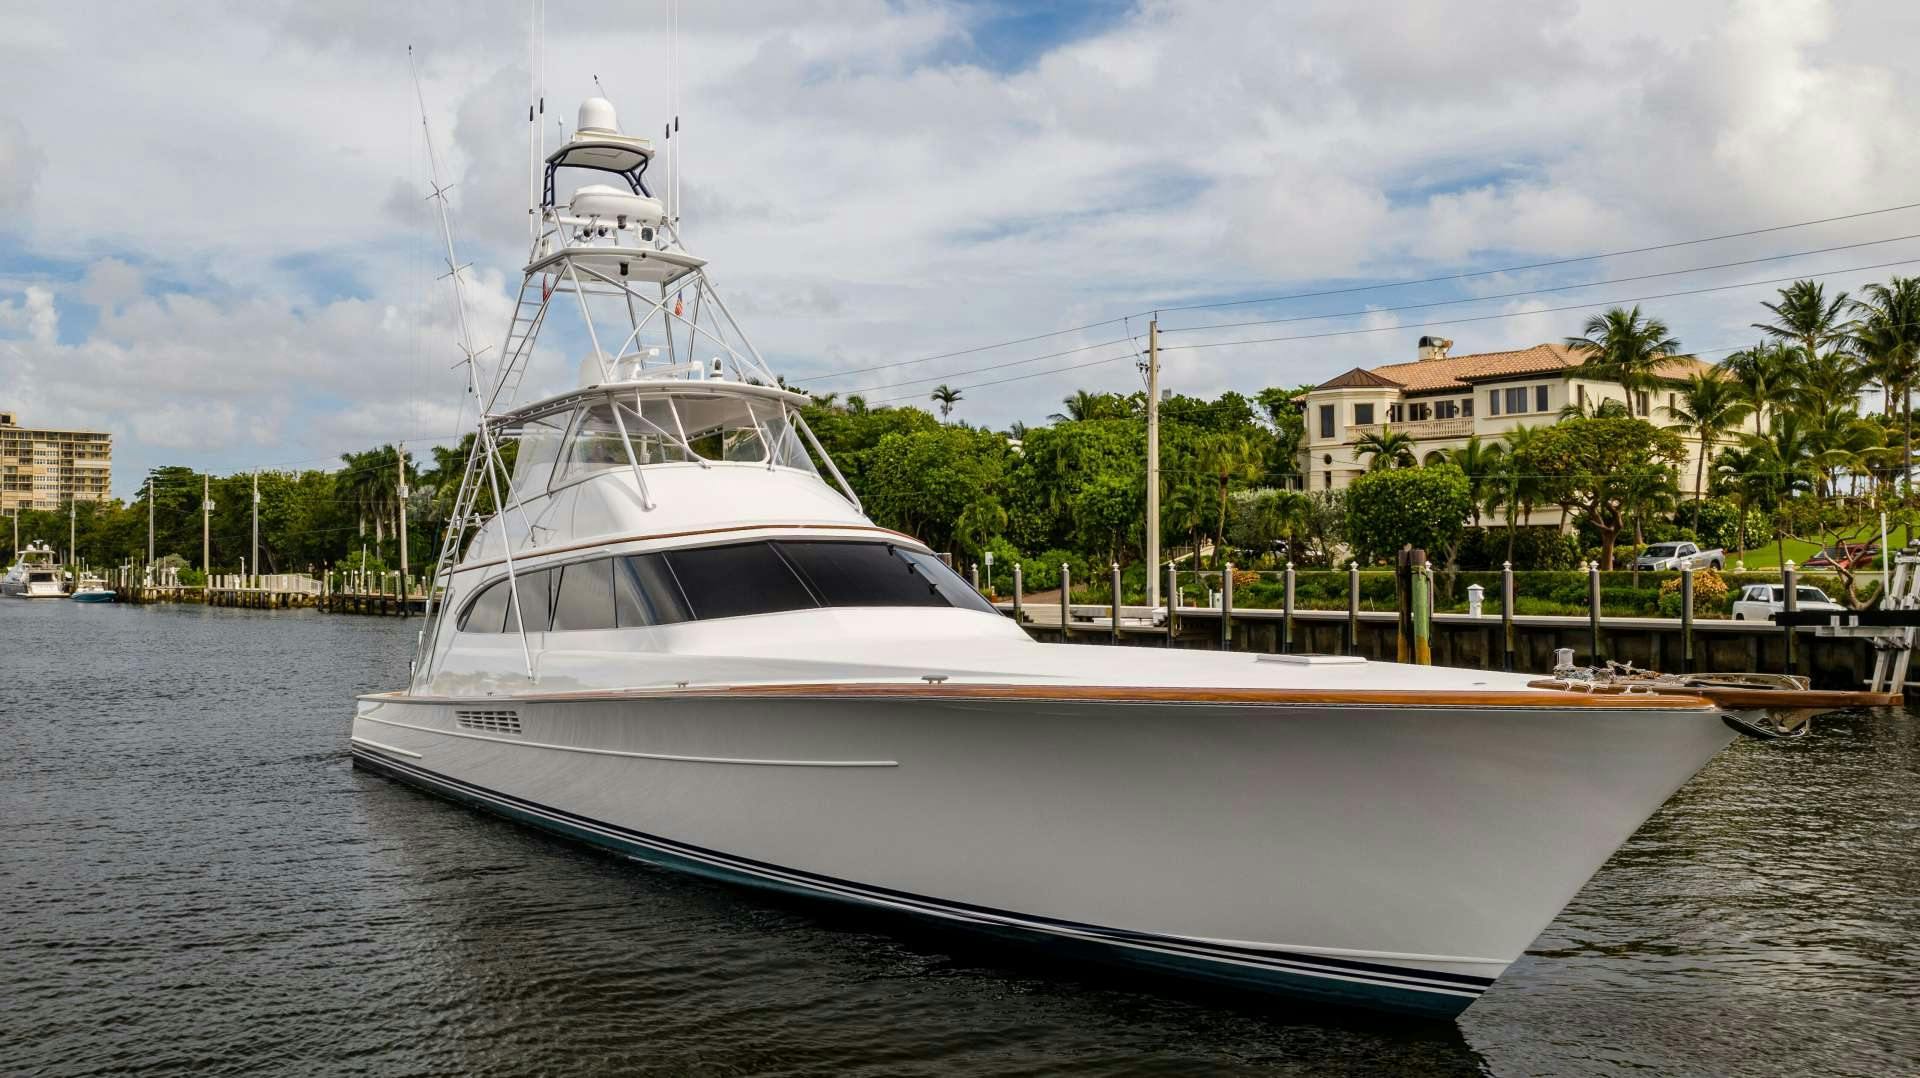 Reel Tight  - Yacht Charter Chesapeake Bay & Boat hire in US East Coast, Bahamas & Mexico 1